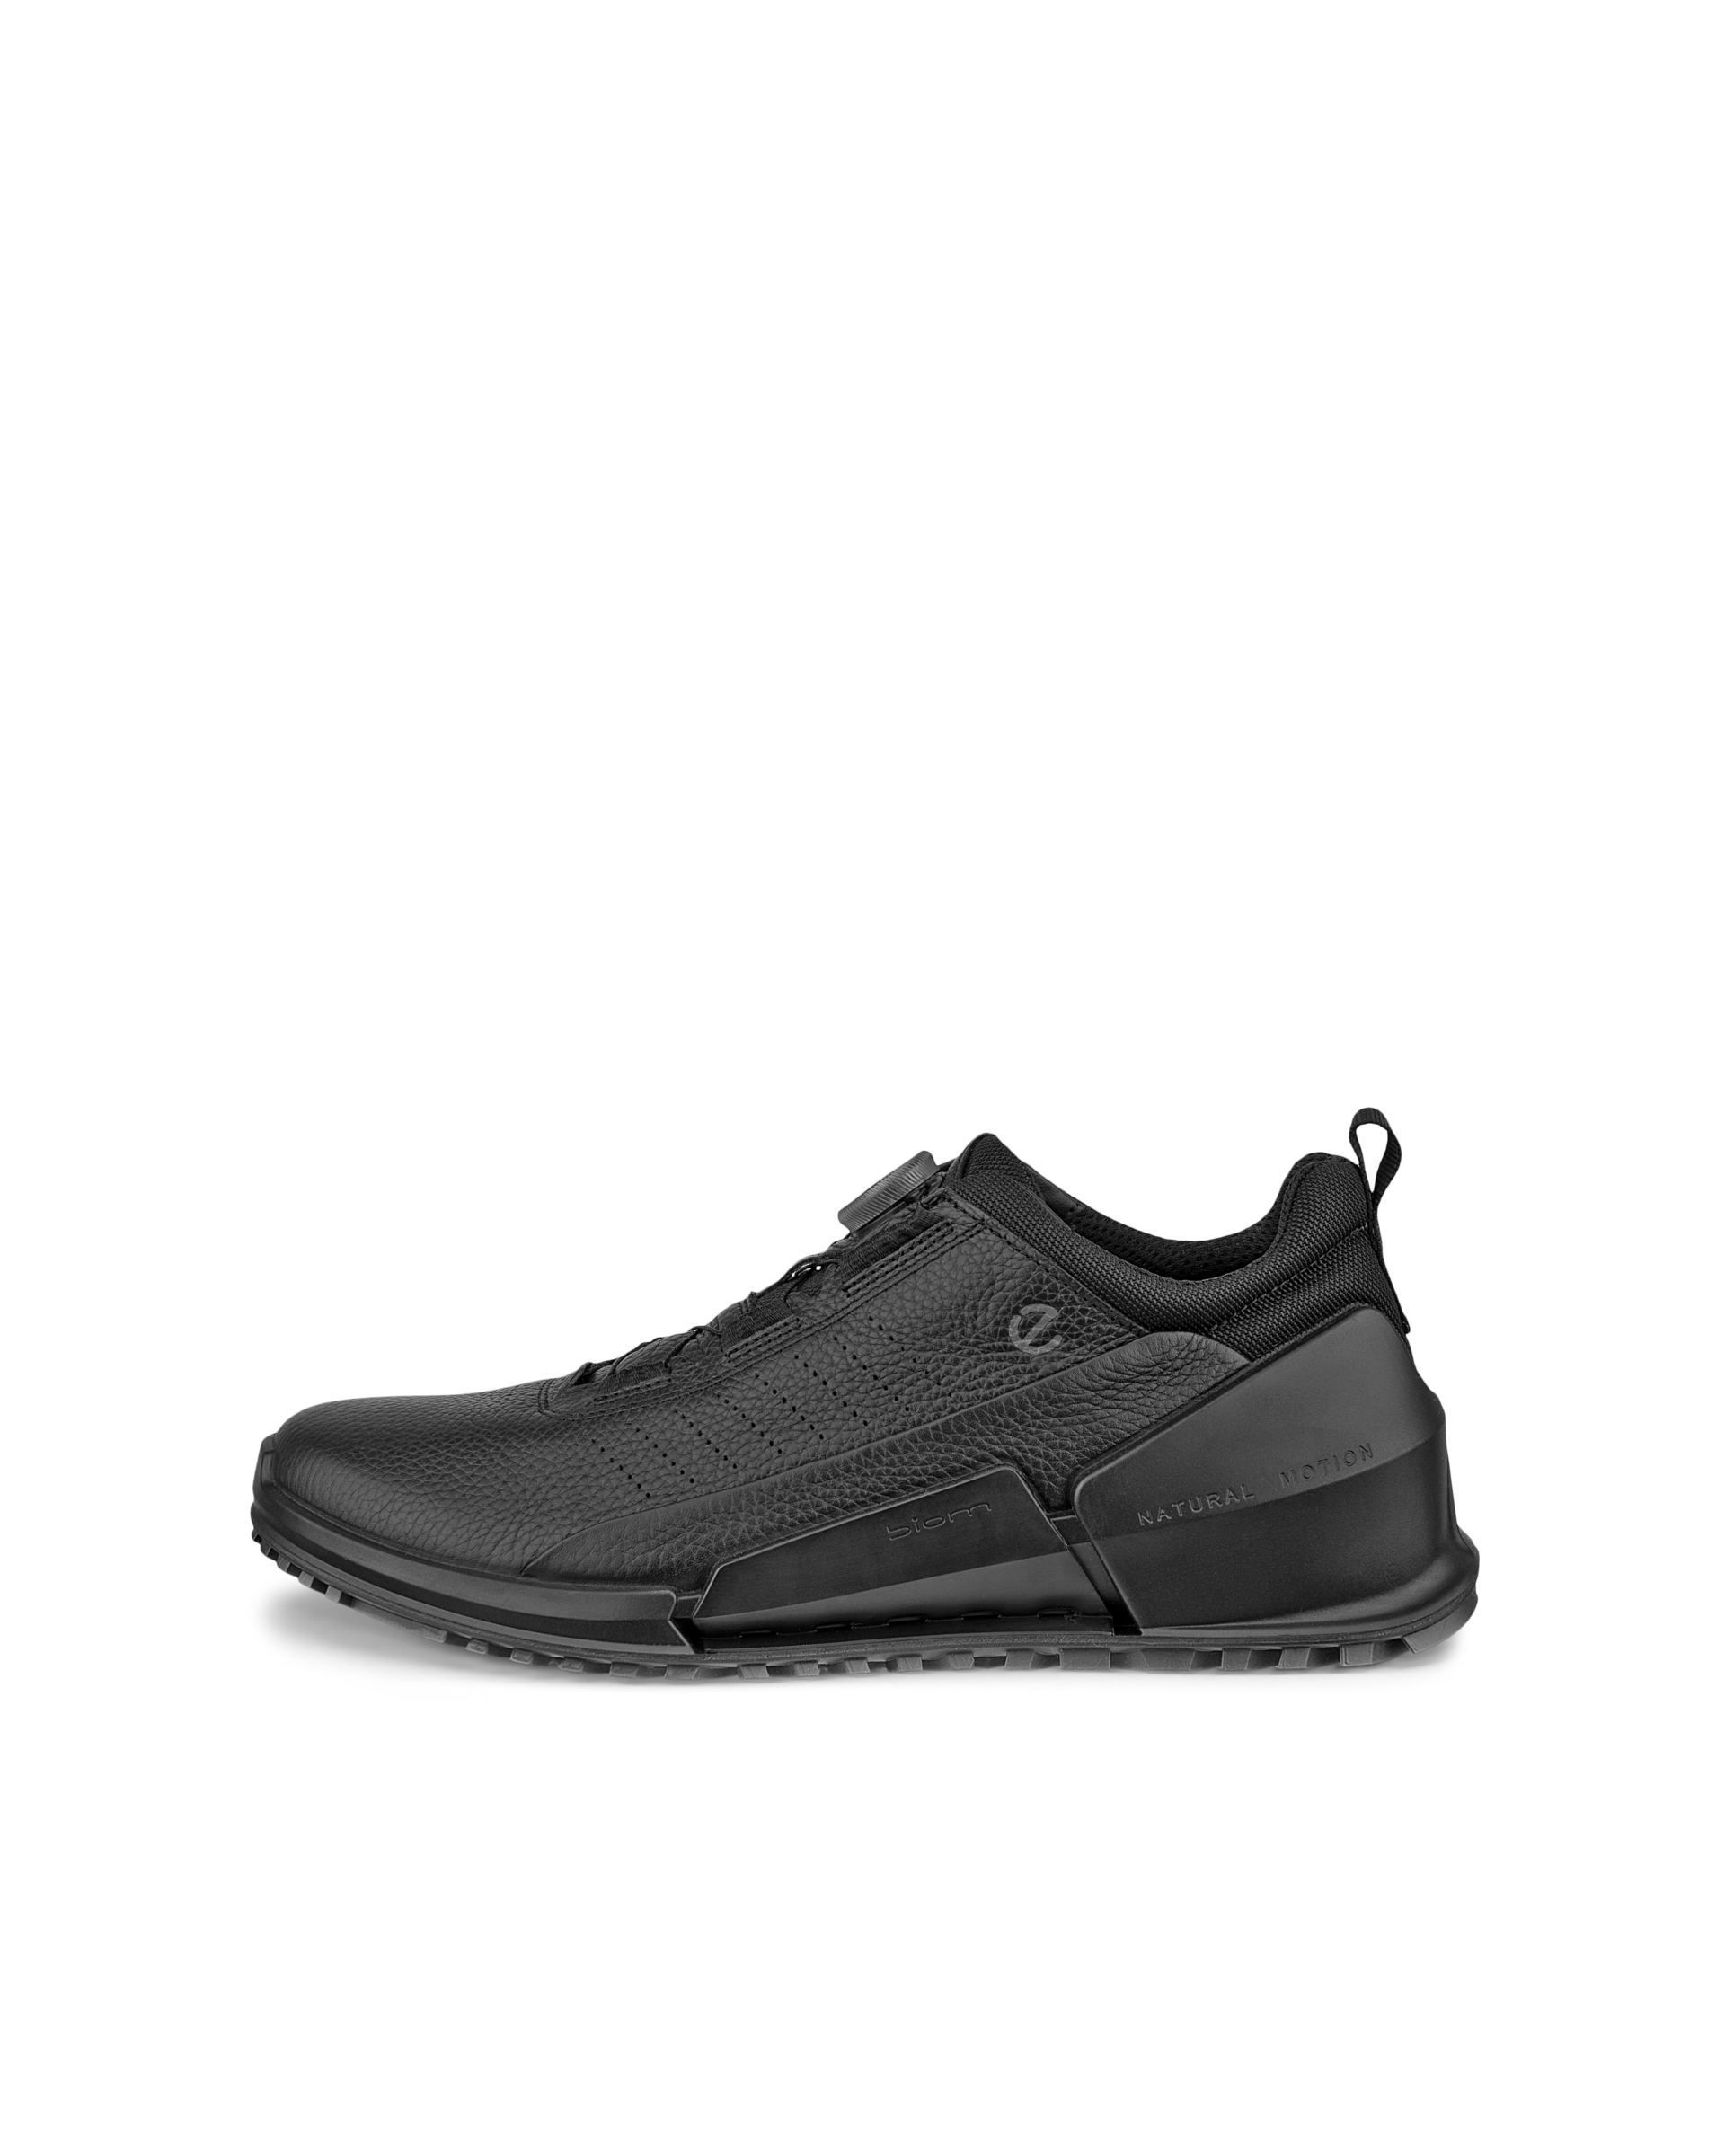 Nike Zoom Vapor 11 AC White/Black Men's Shoes | Tennis Warehouse Europe